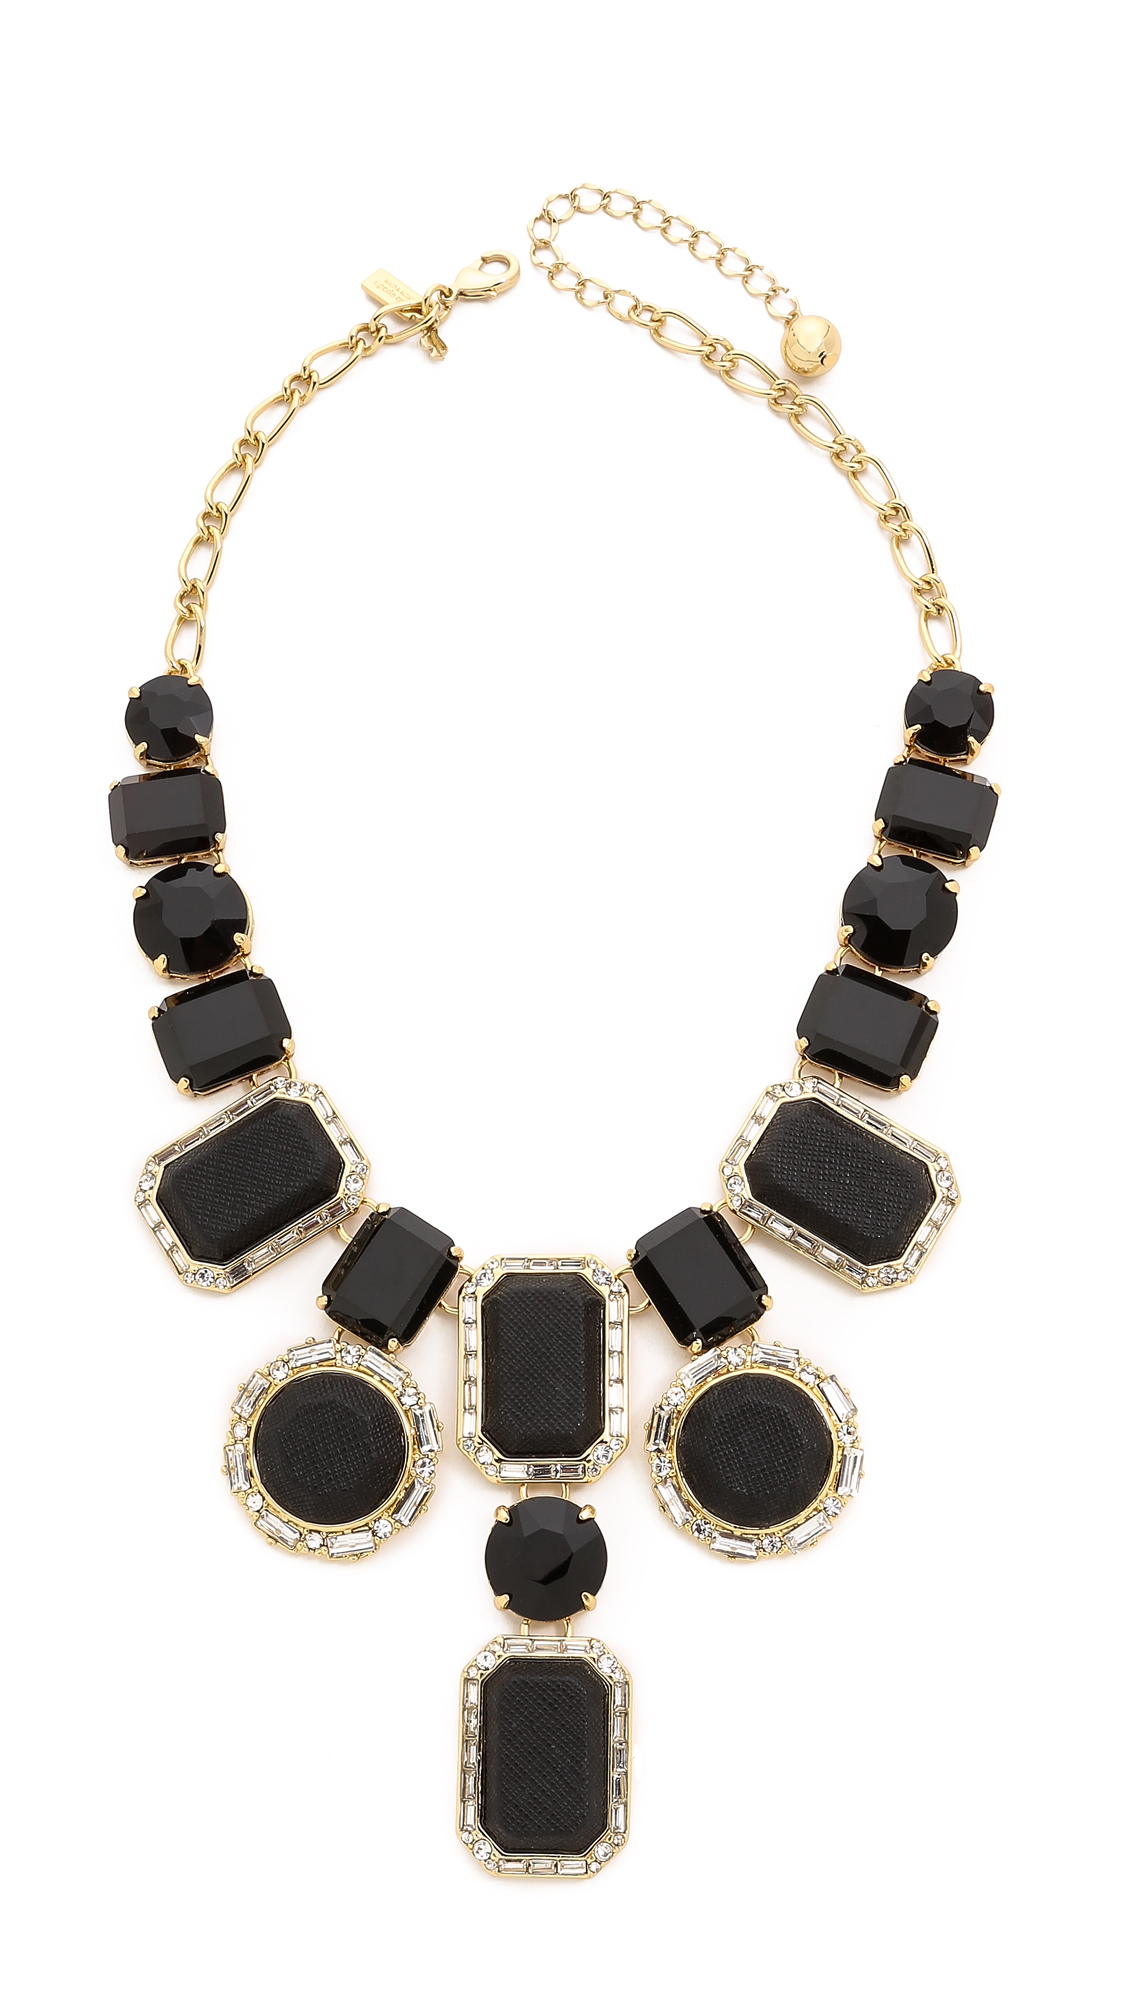 Kate spade new york Jackpot Jewels Statement Necklace - Black in Black